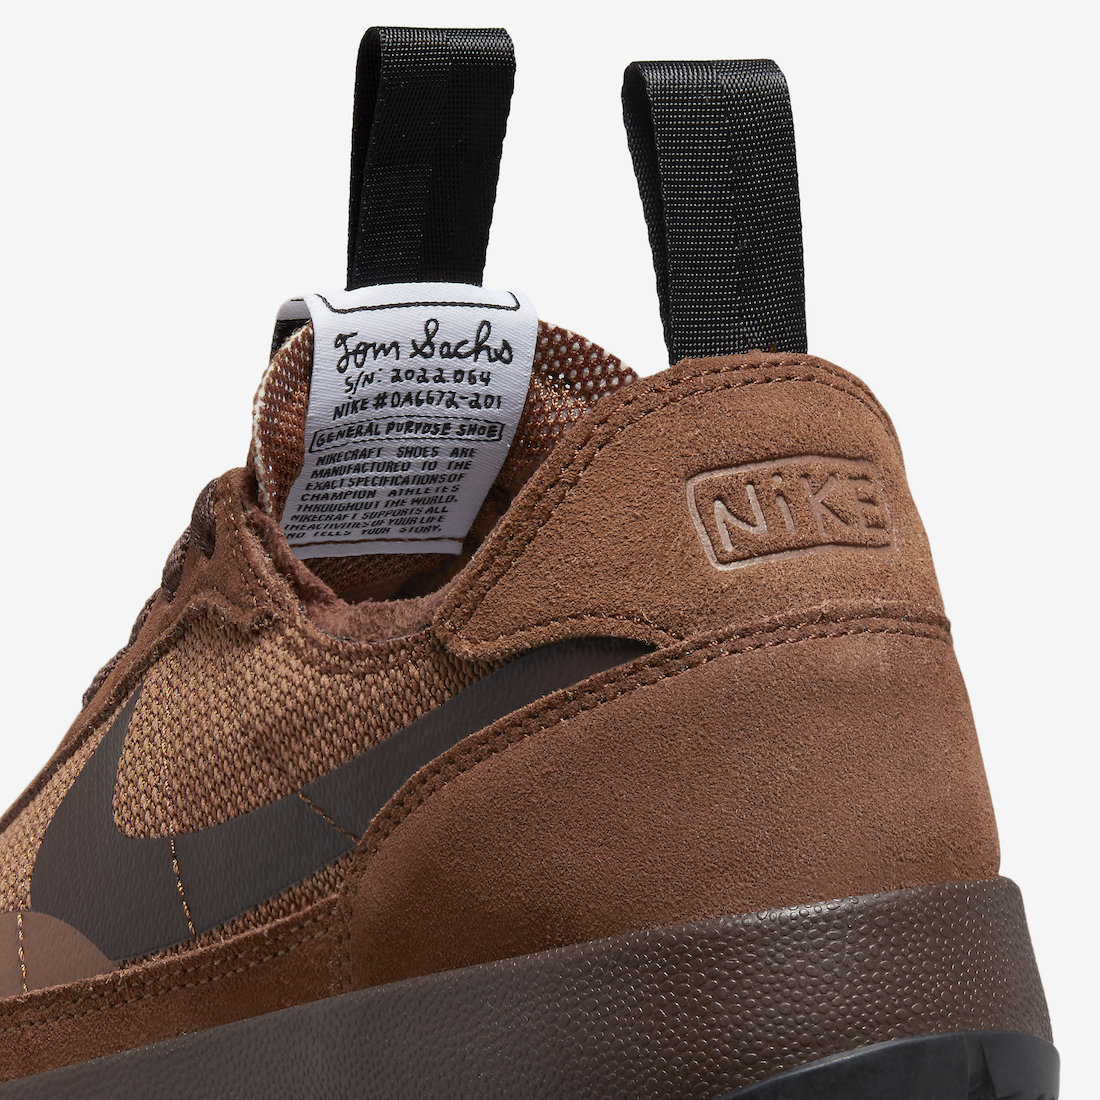 Tom Sachs NikeCraft General Purpose Shoe Field Brown DA6672-201 Release Date Store Listings